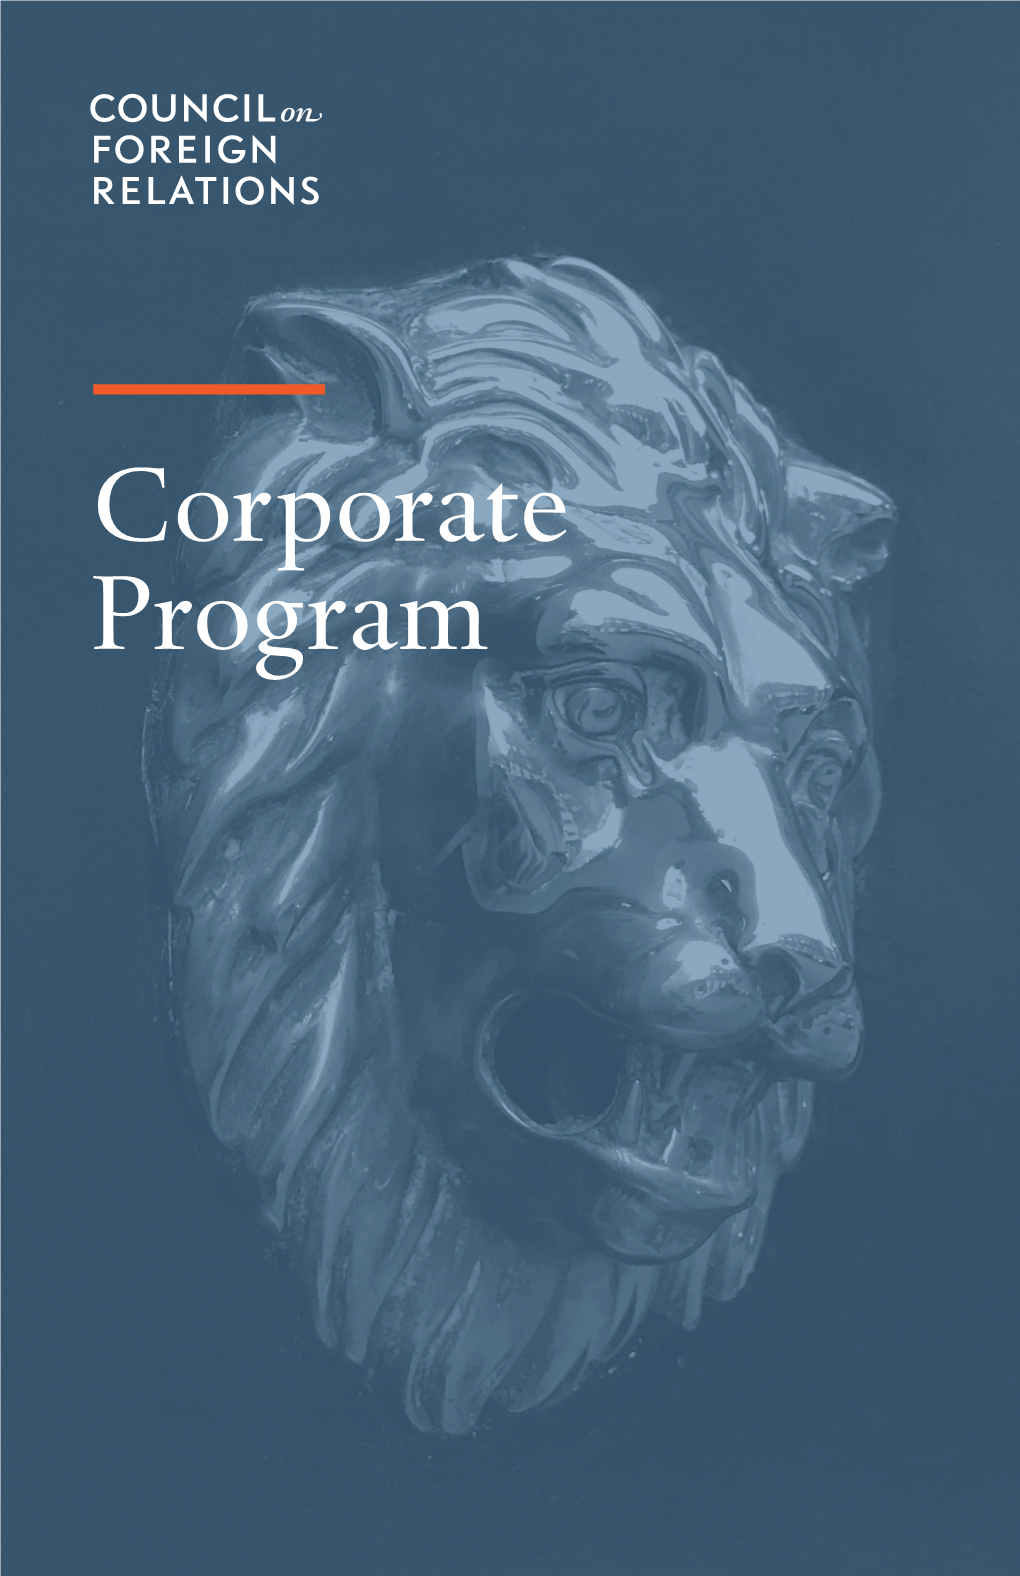 Corporate Program the Corporate Member Experience